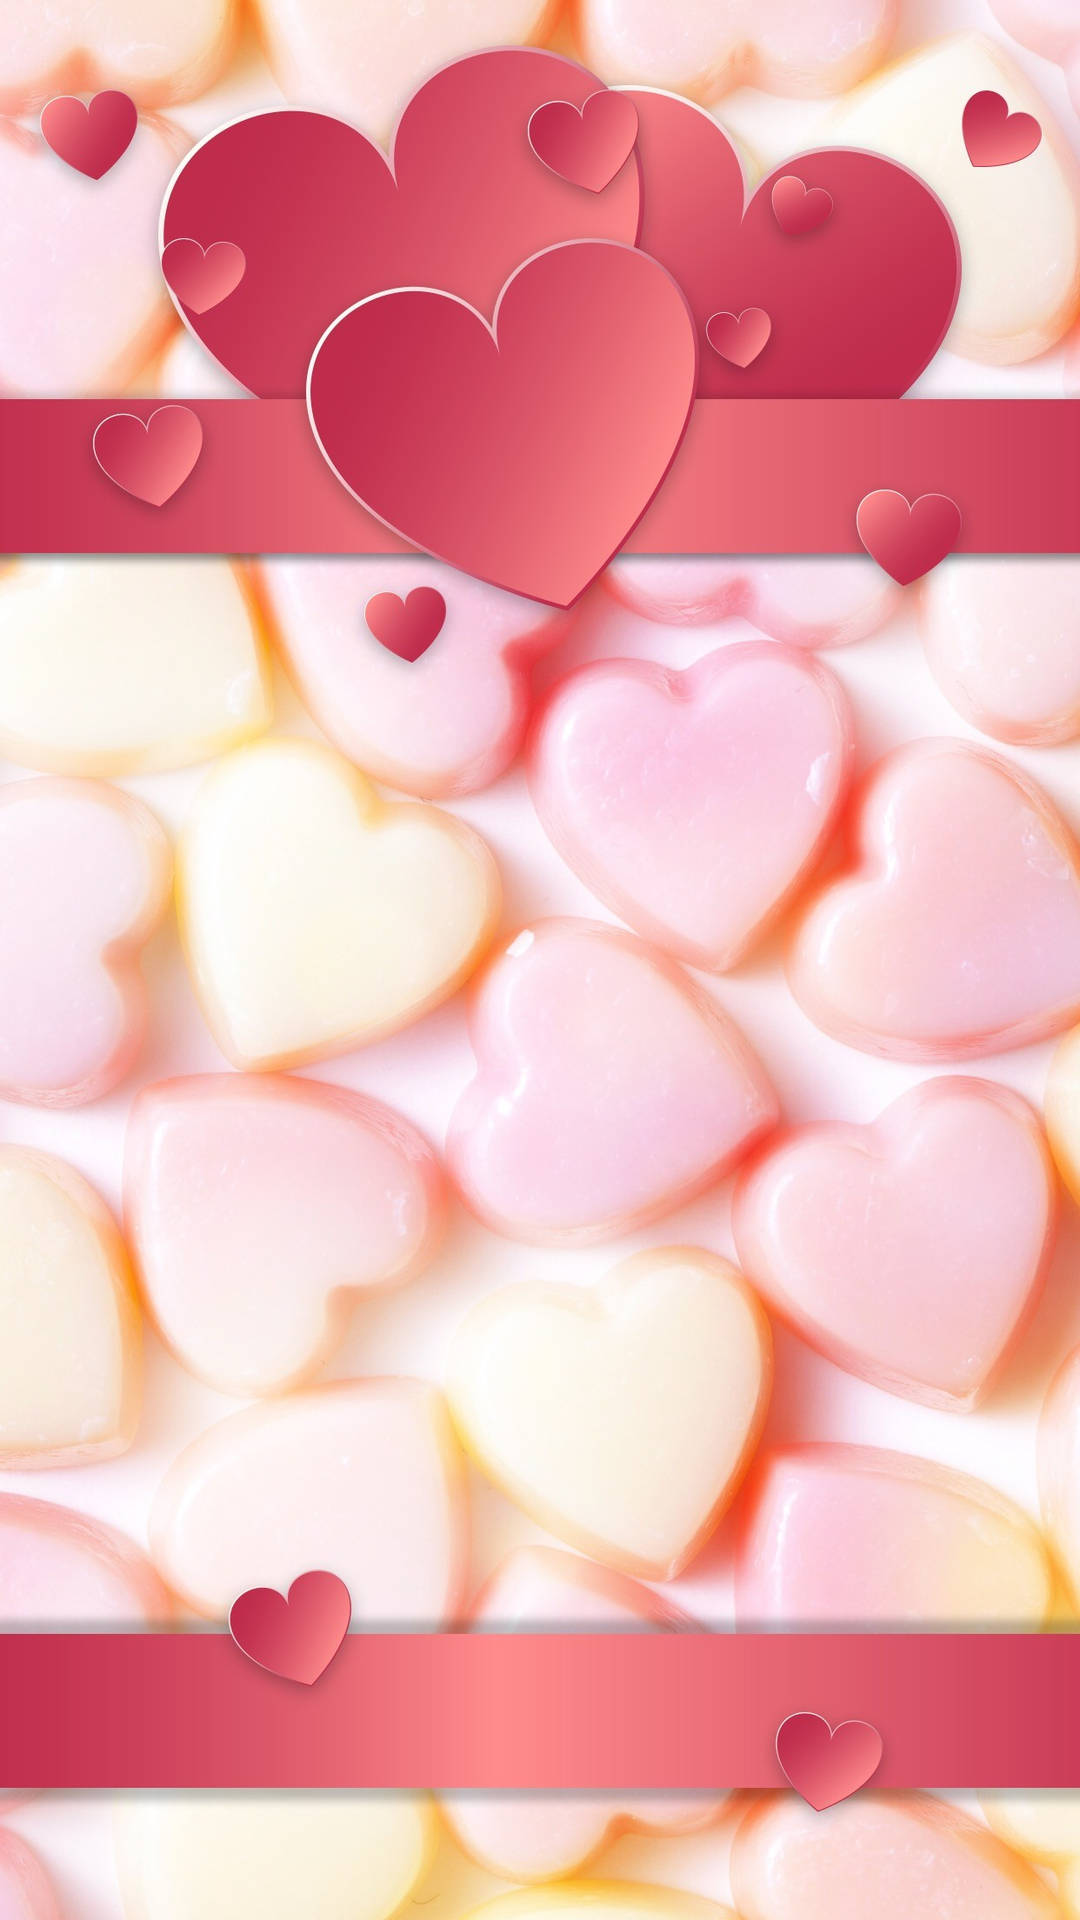 Sweet Heart-shaped Candy Wallpaper